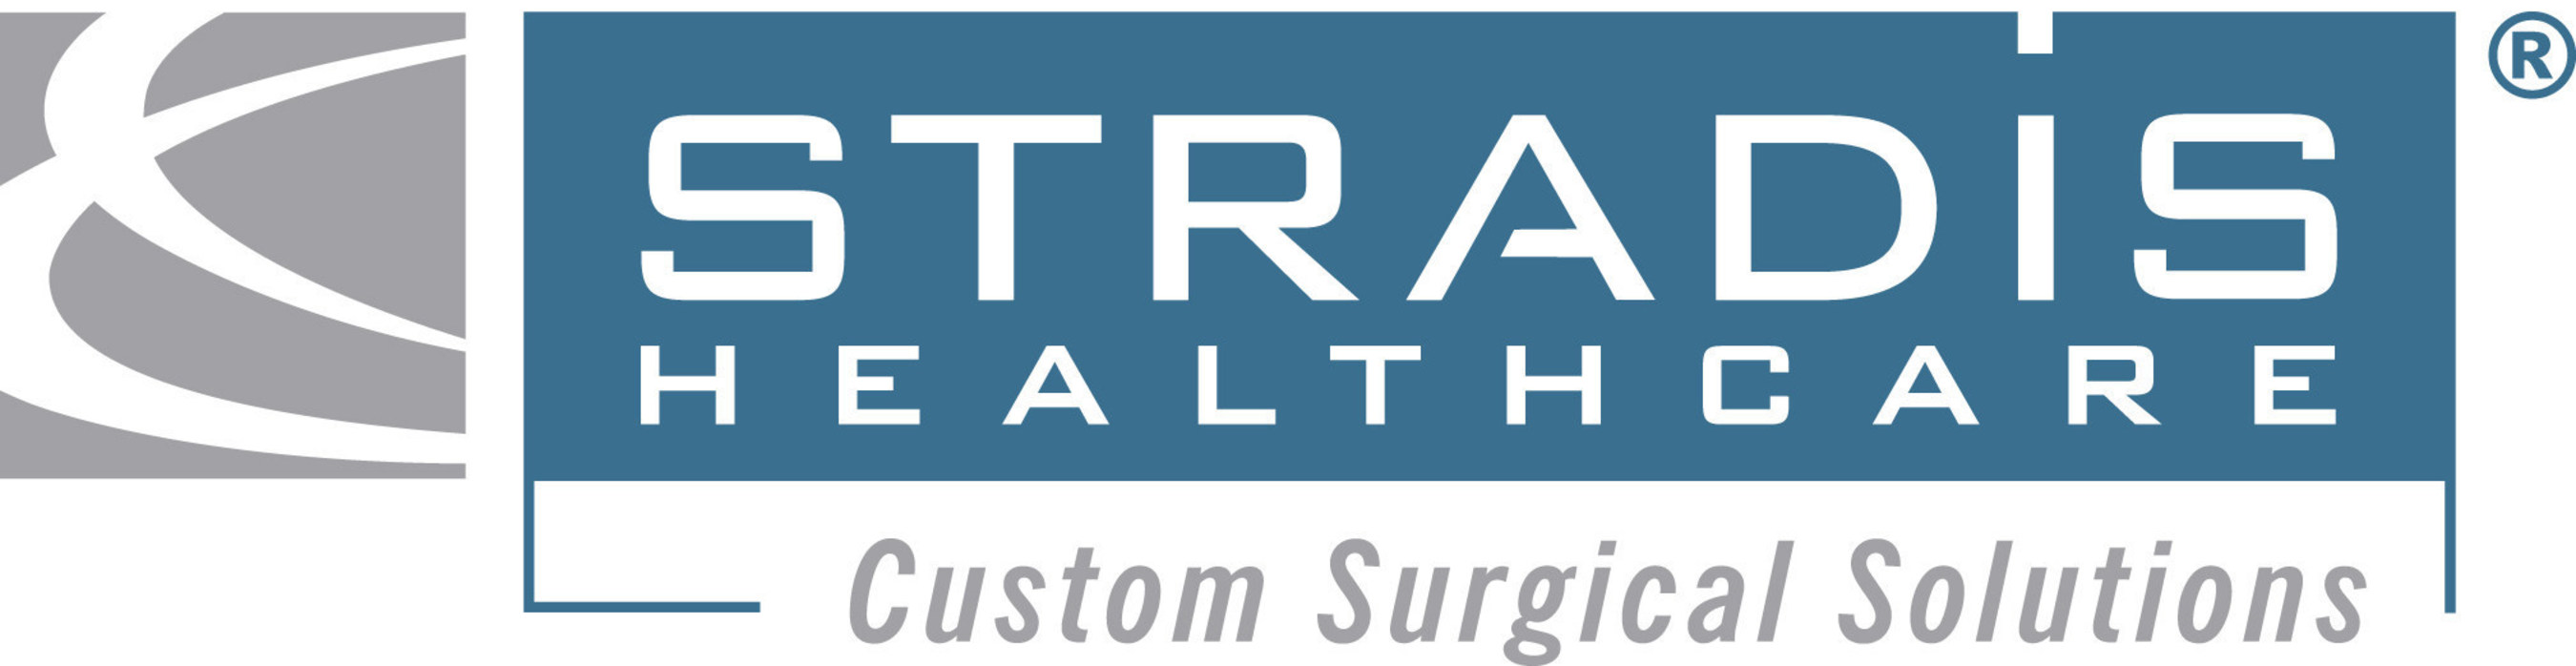 Stradis Healthcare logo